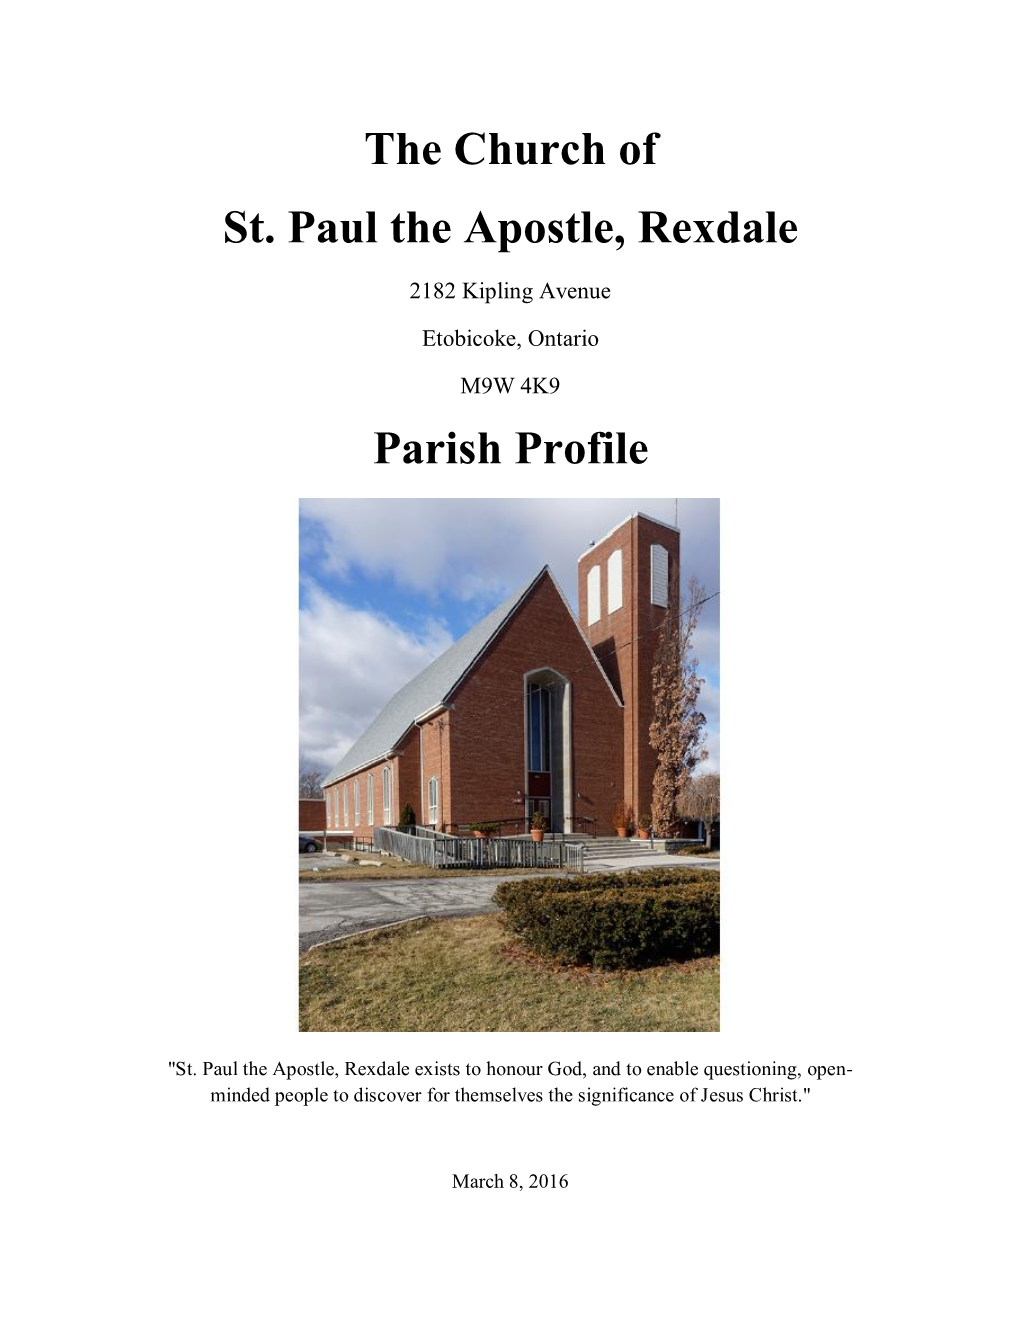 The Church of St. Paul the Apostle, Rexdale Parish Profile